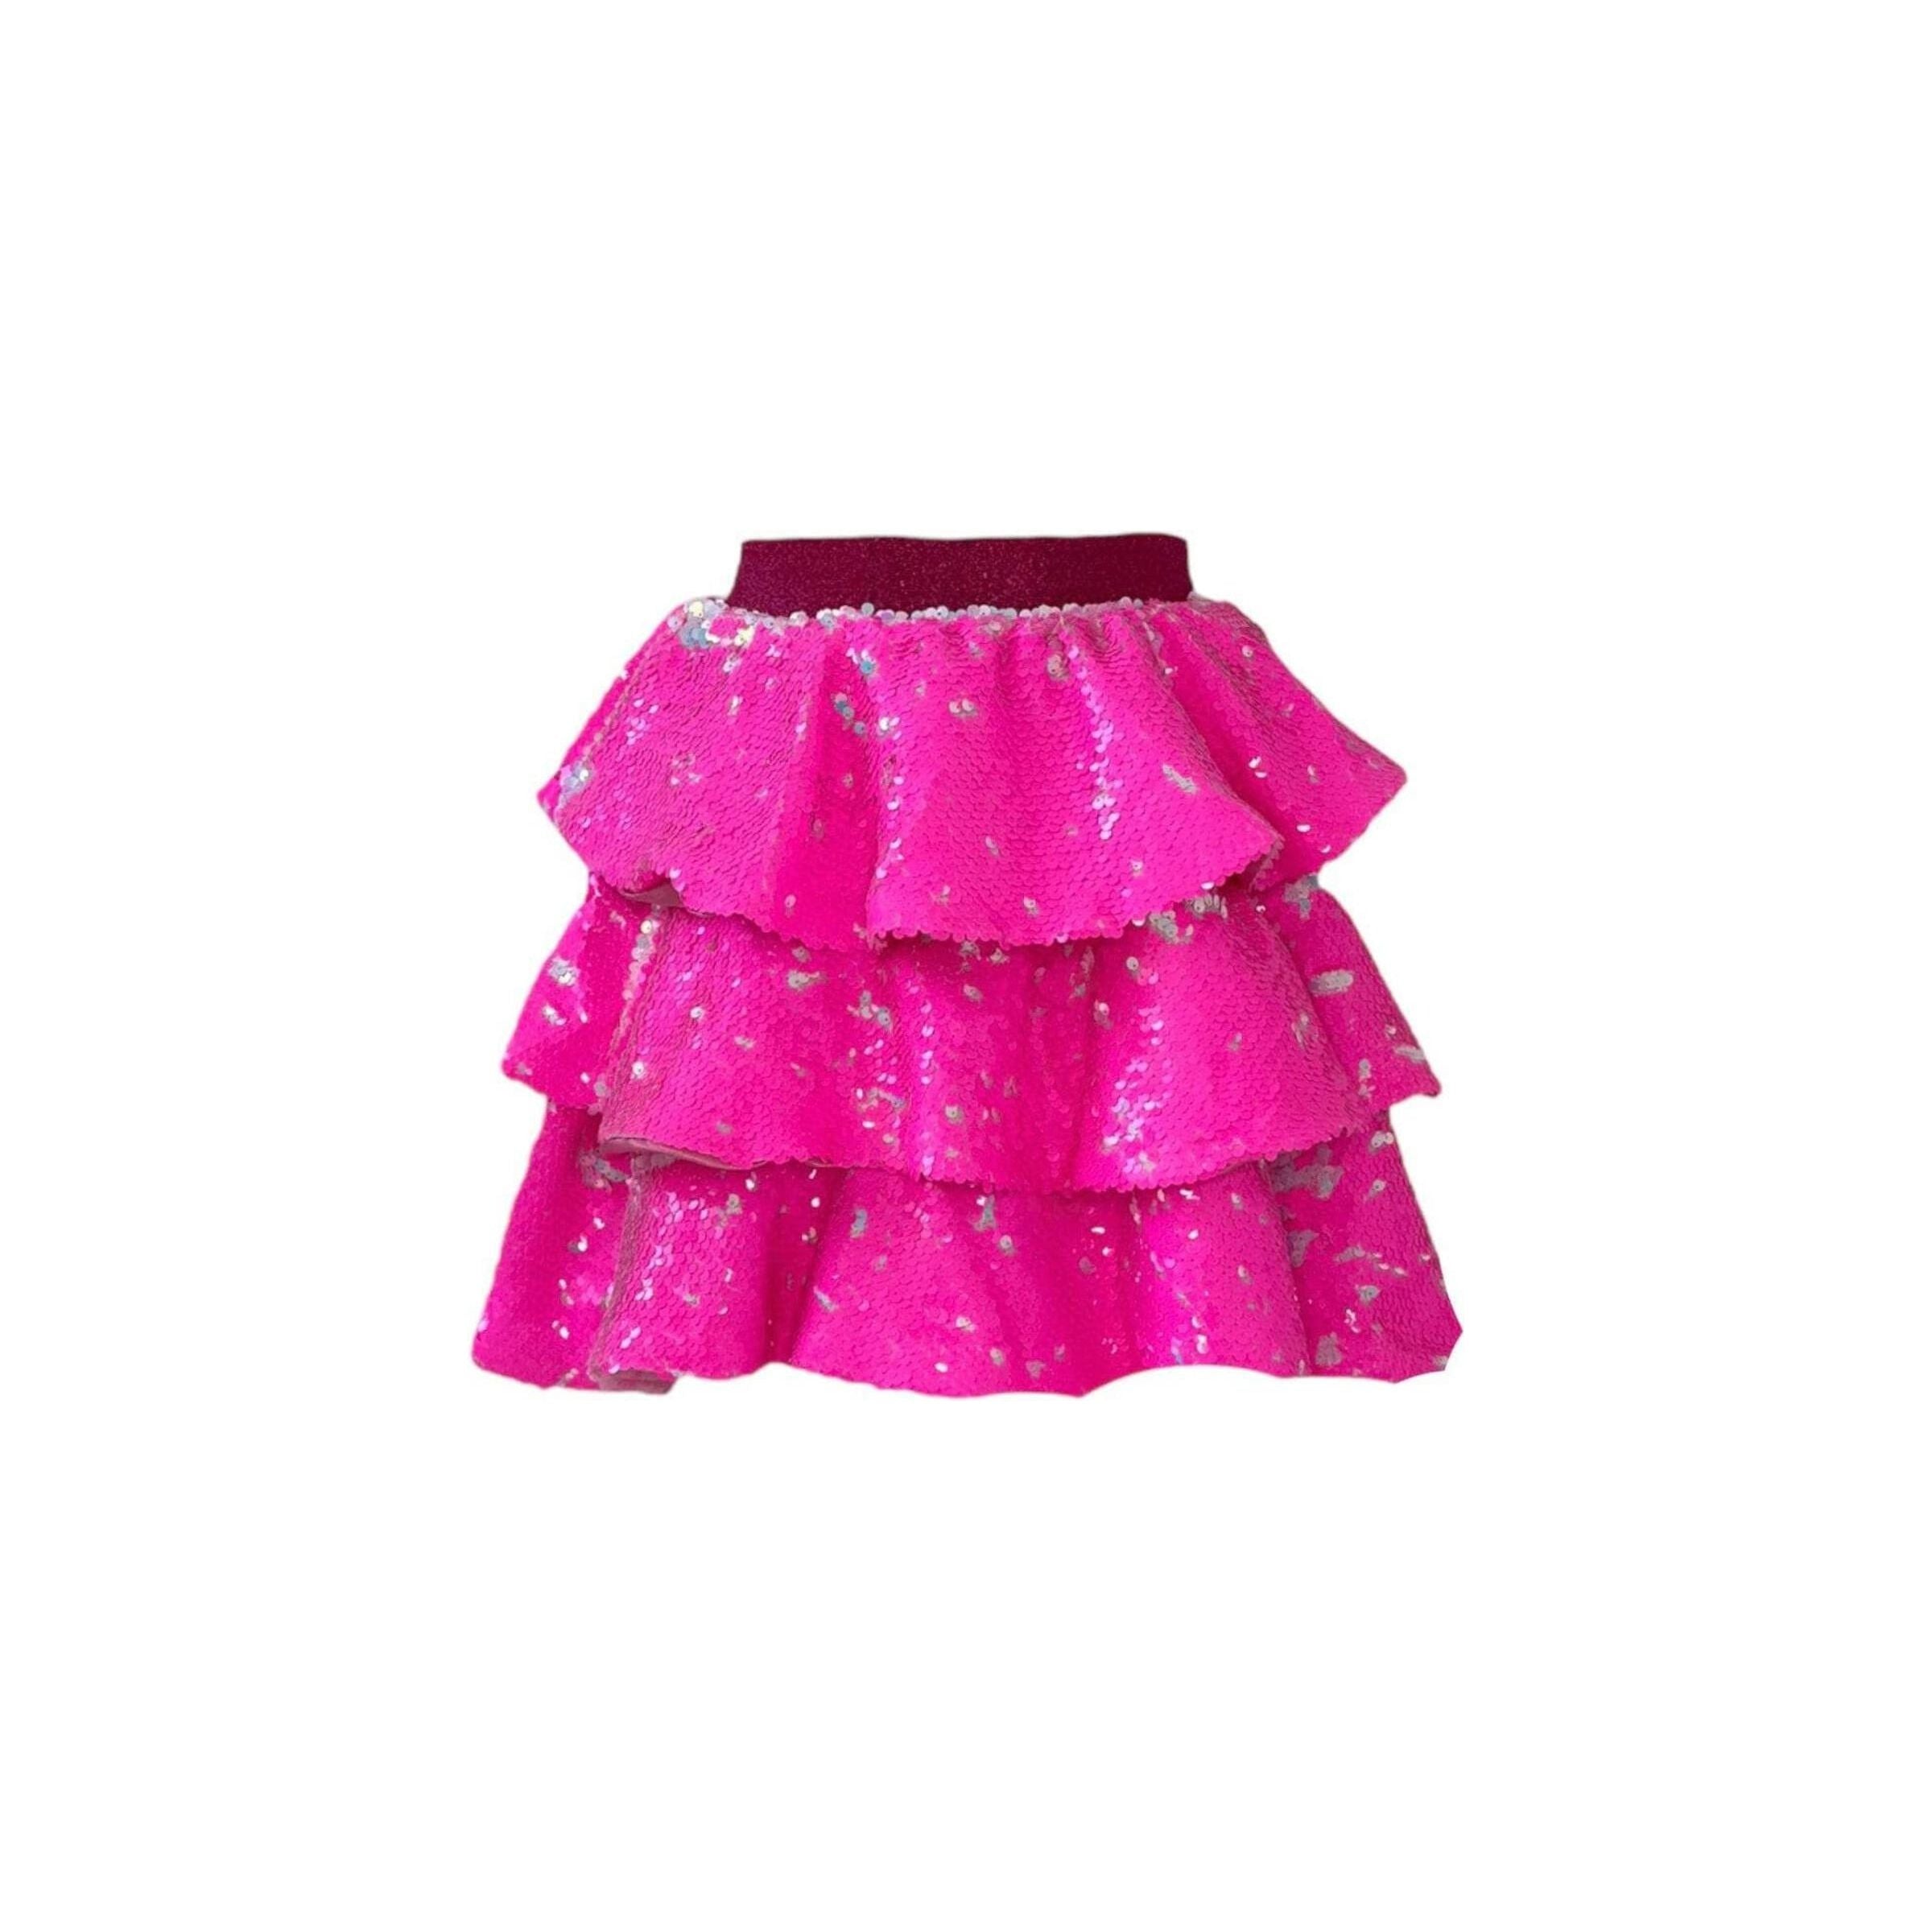 Sparkle Skirt - Hot Pink 3-Tier